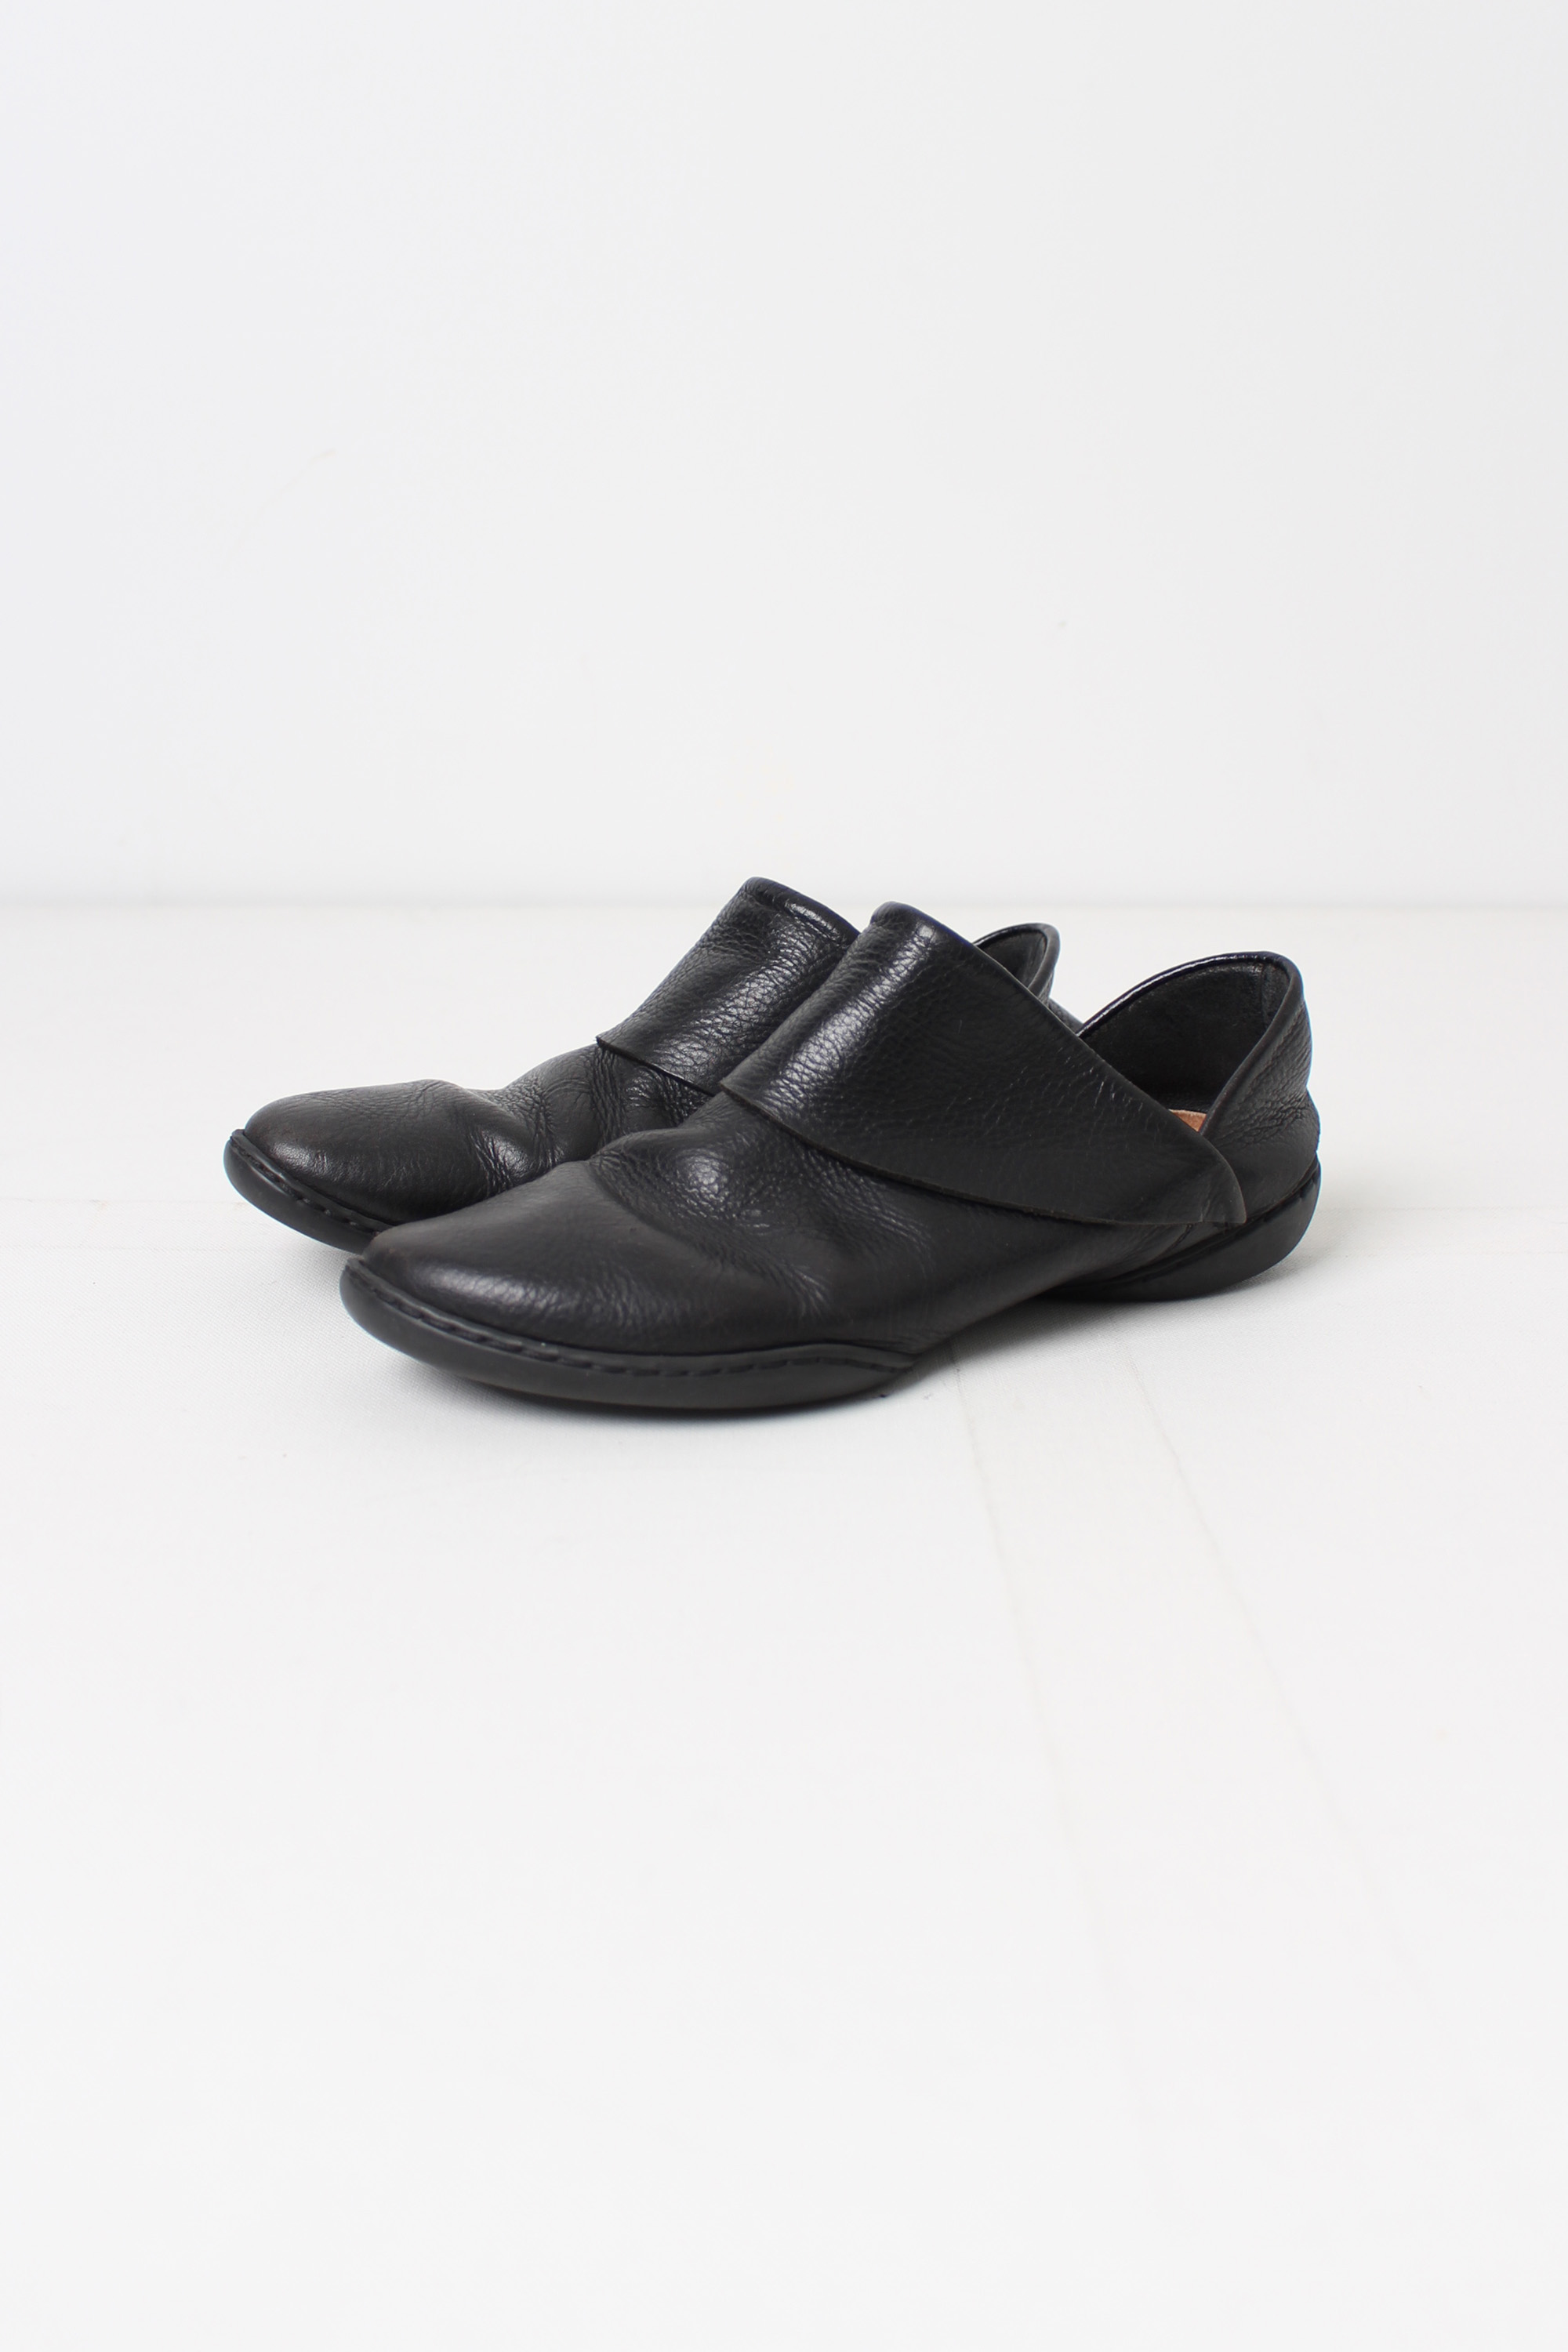 trippen medieval low comfort shoes